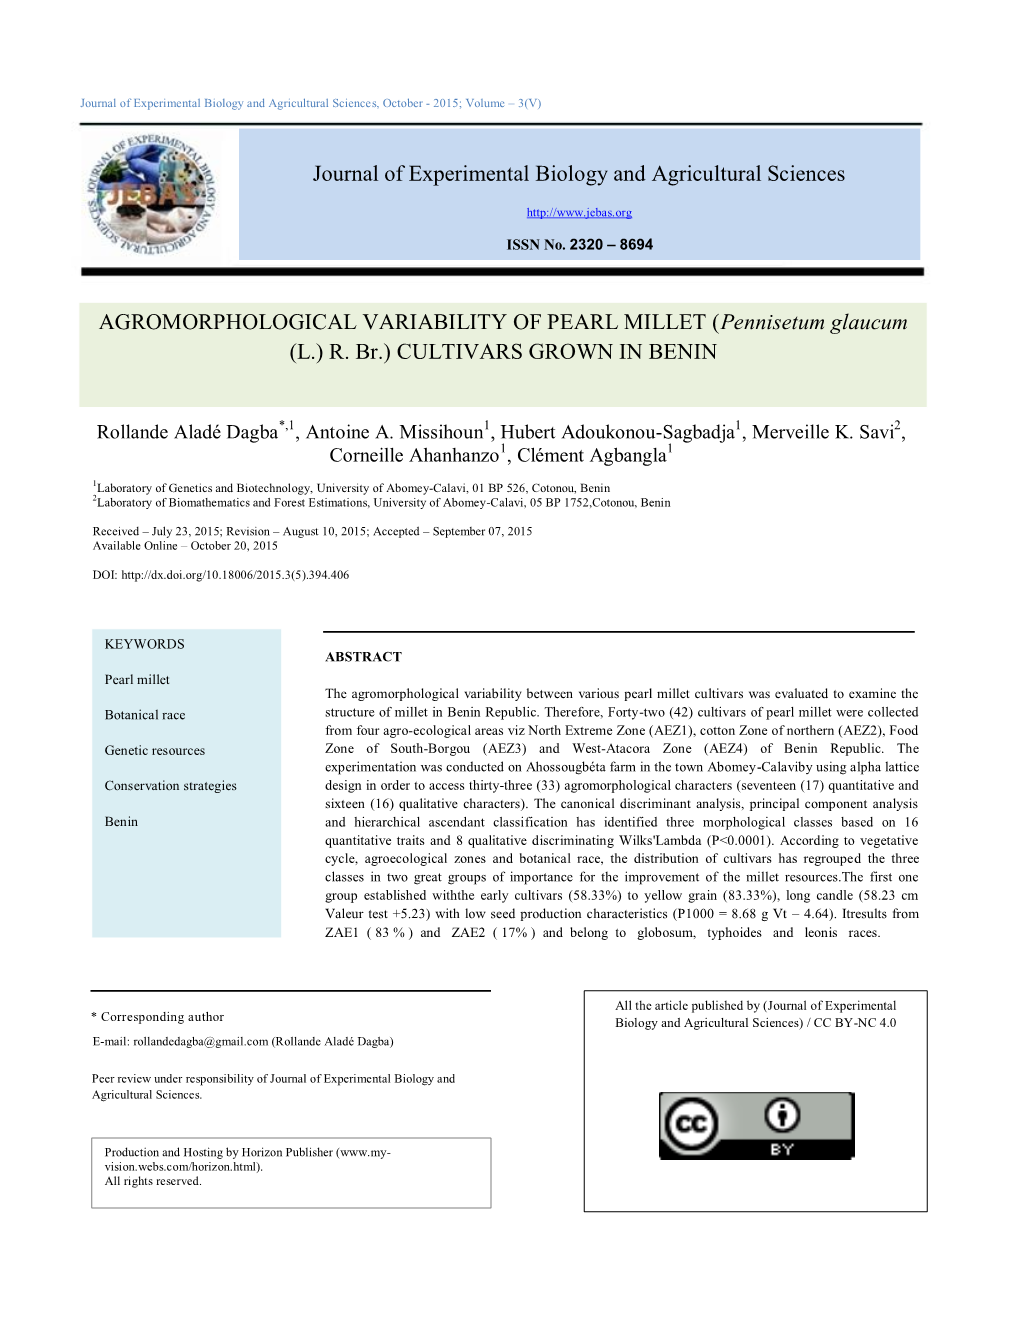 AGROMORPHOLOGICAL VARIABILITY of PEARL MILLET (Pennisetum Glaucum (L.) R